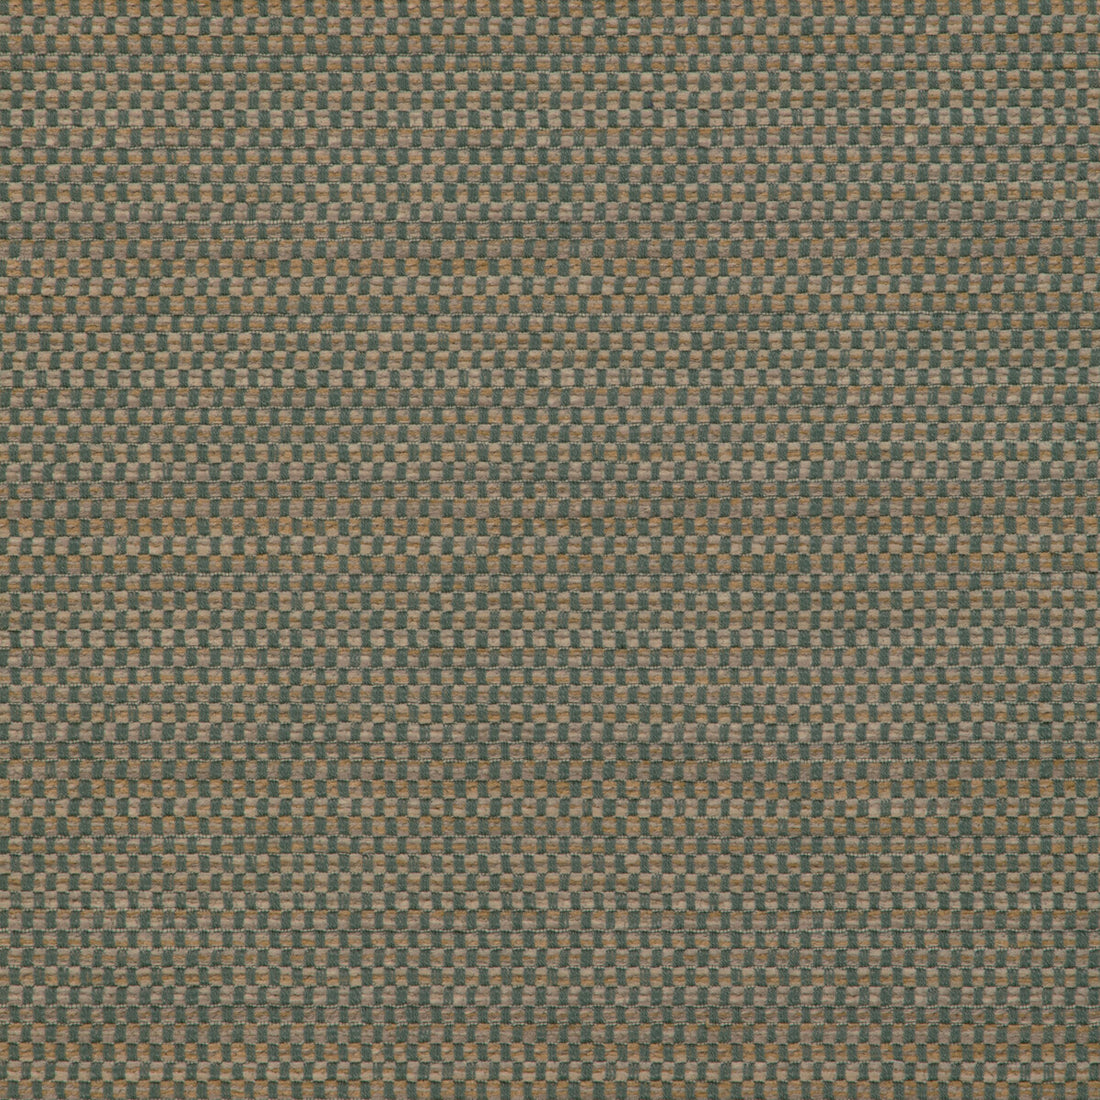 Kravet Smart fabric in 36994-3 color - pattern 36994.3.0 - by Kravet Smart in the Pavilion collection